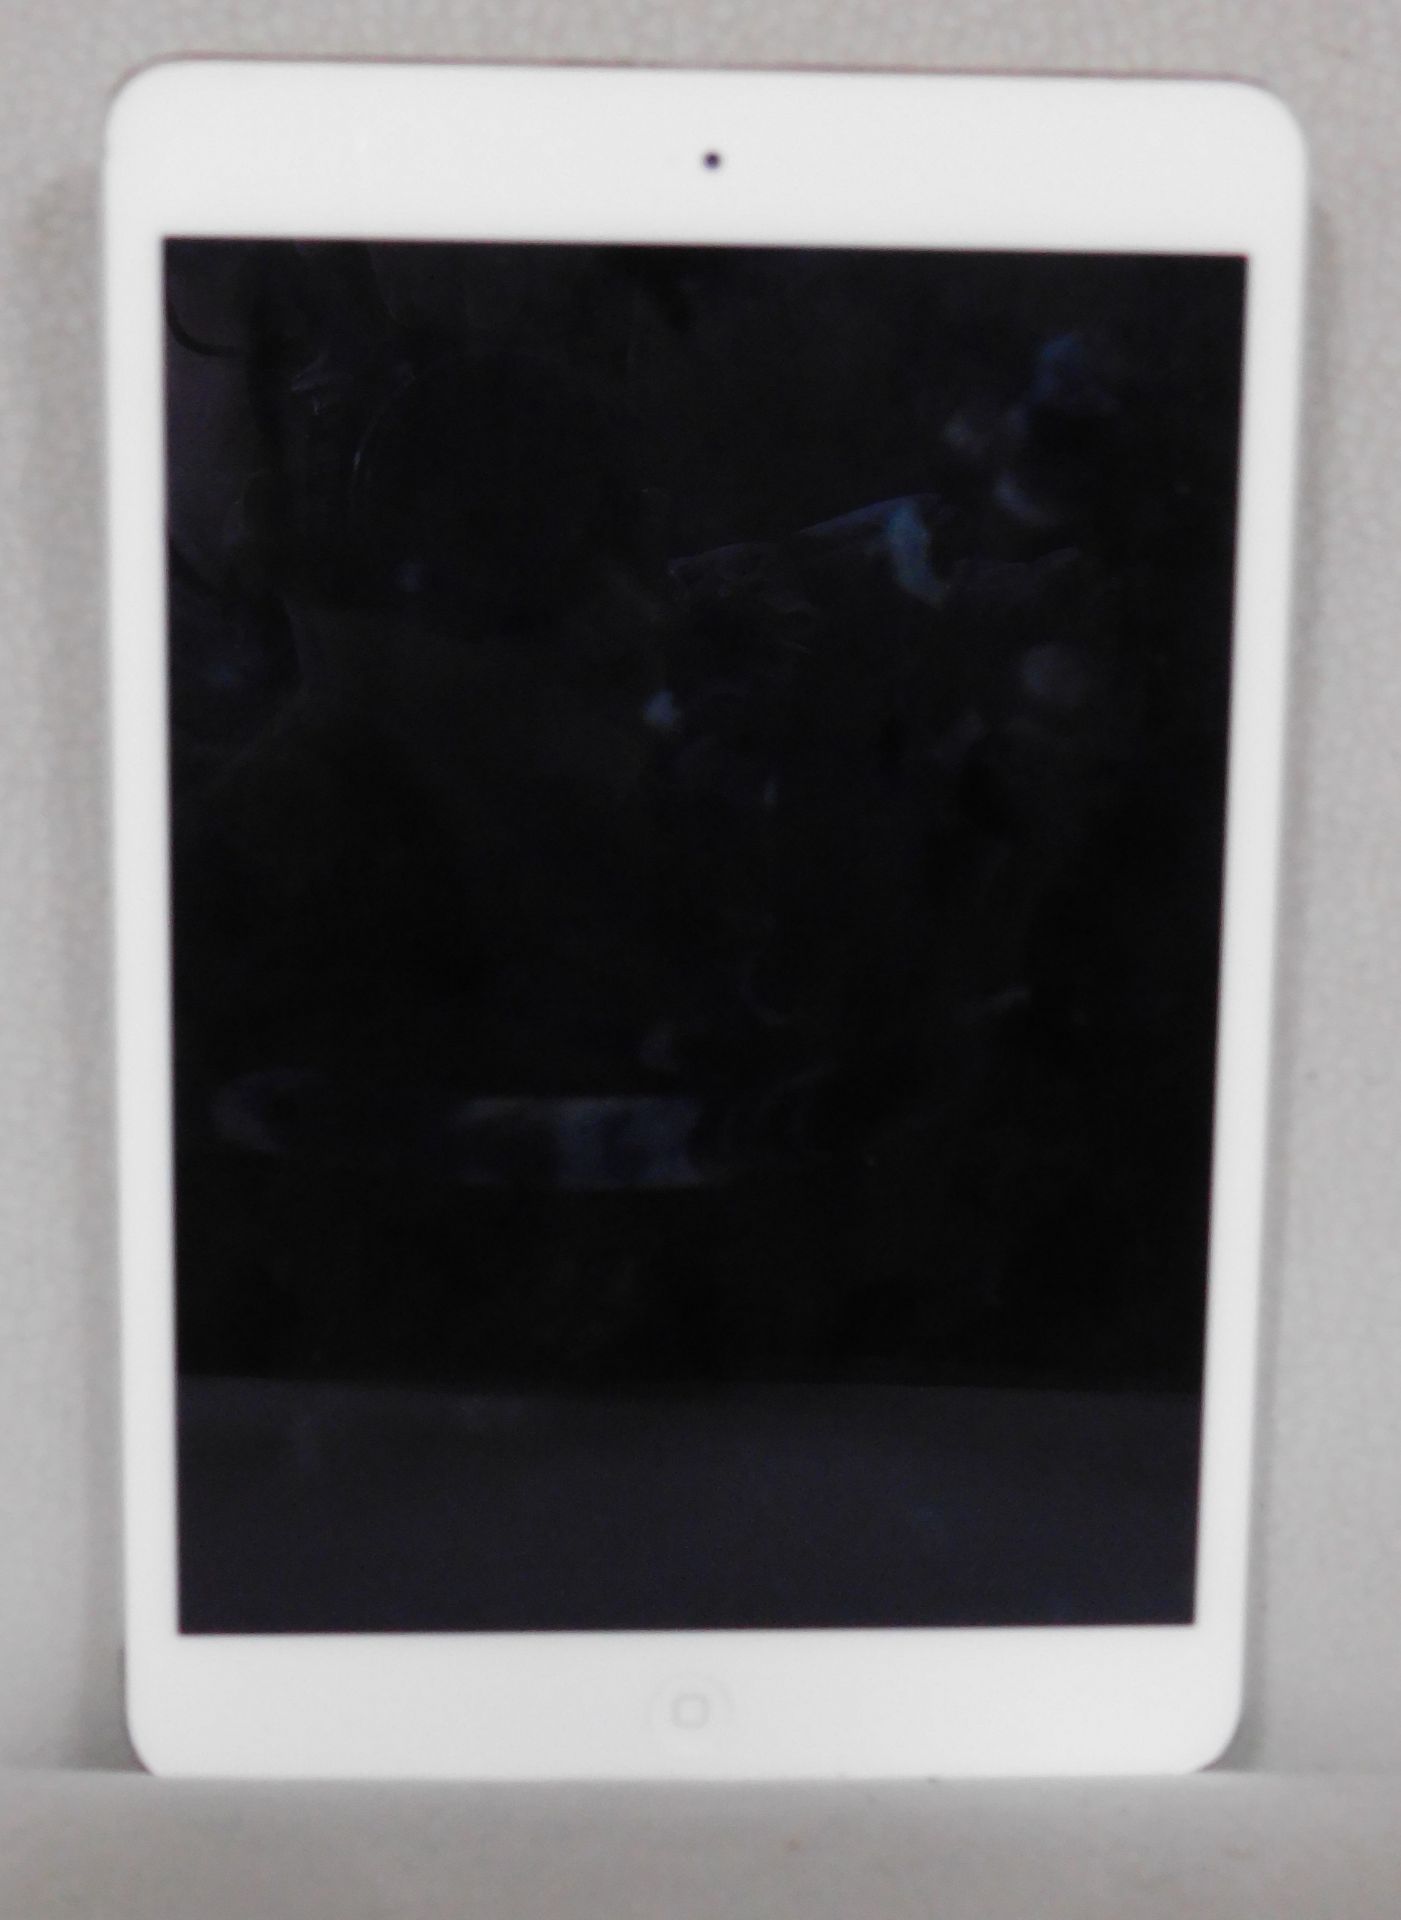 Apple iPad Mini 2 Retina WIFI 16GB Silver, Model Number: A1489, Serial Number: F8QS70ITFCM8 (Located